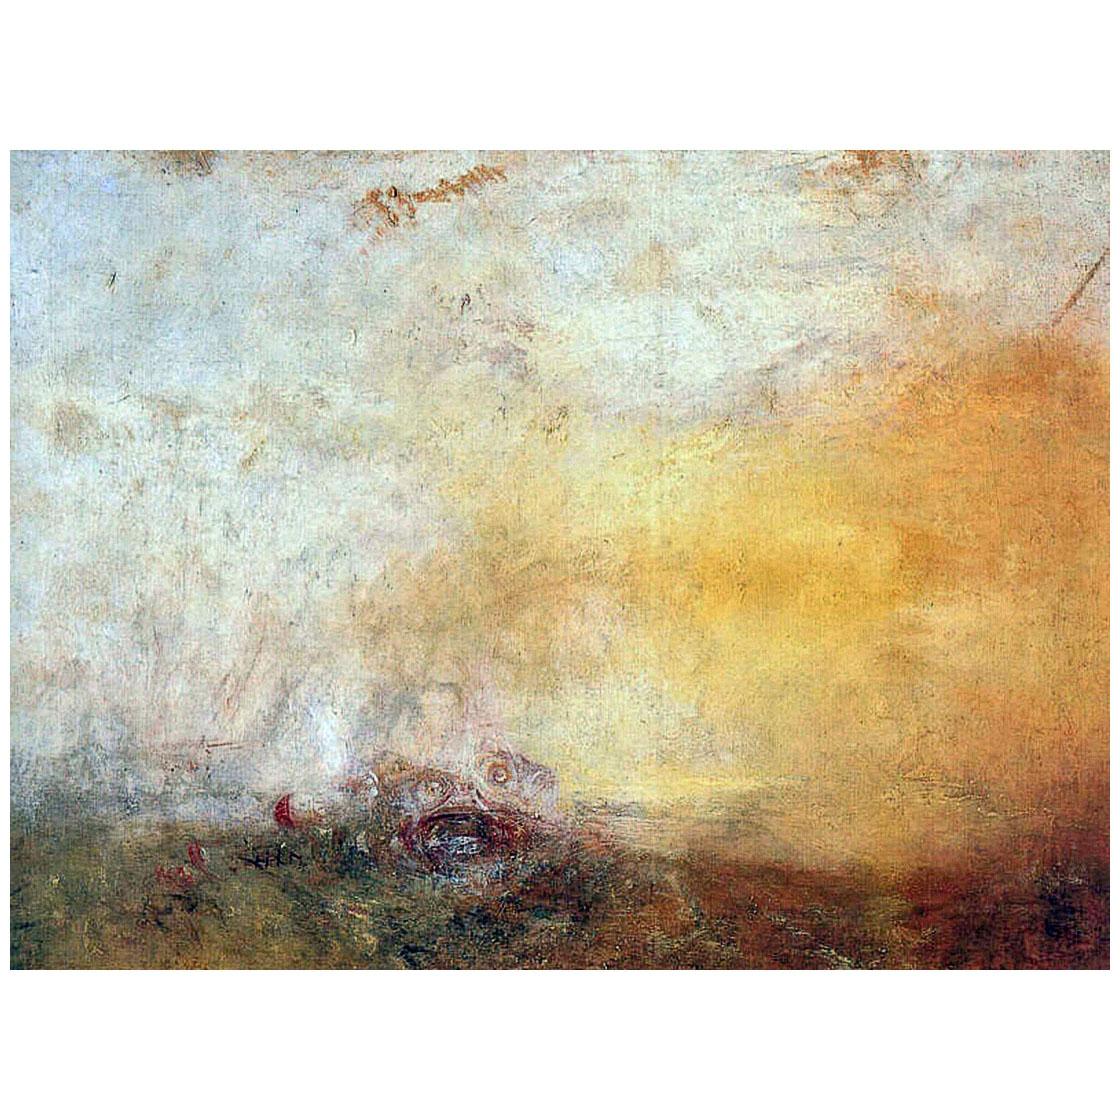 William Turner. Sunrise with Sea Monsters. 1845. Tate Britain